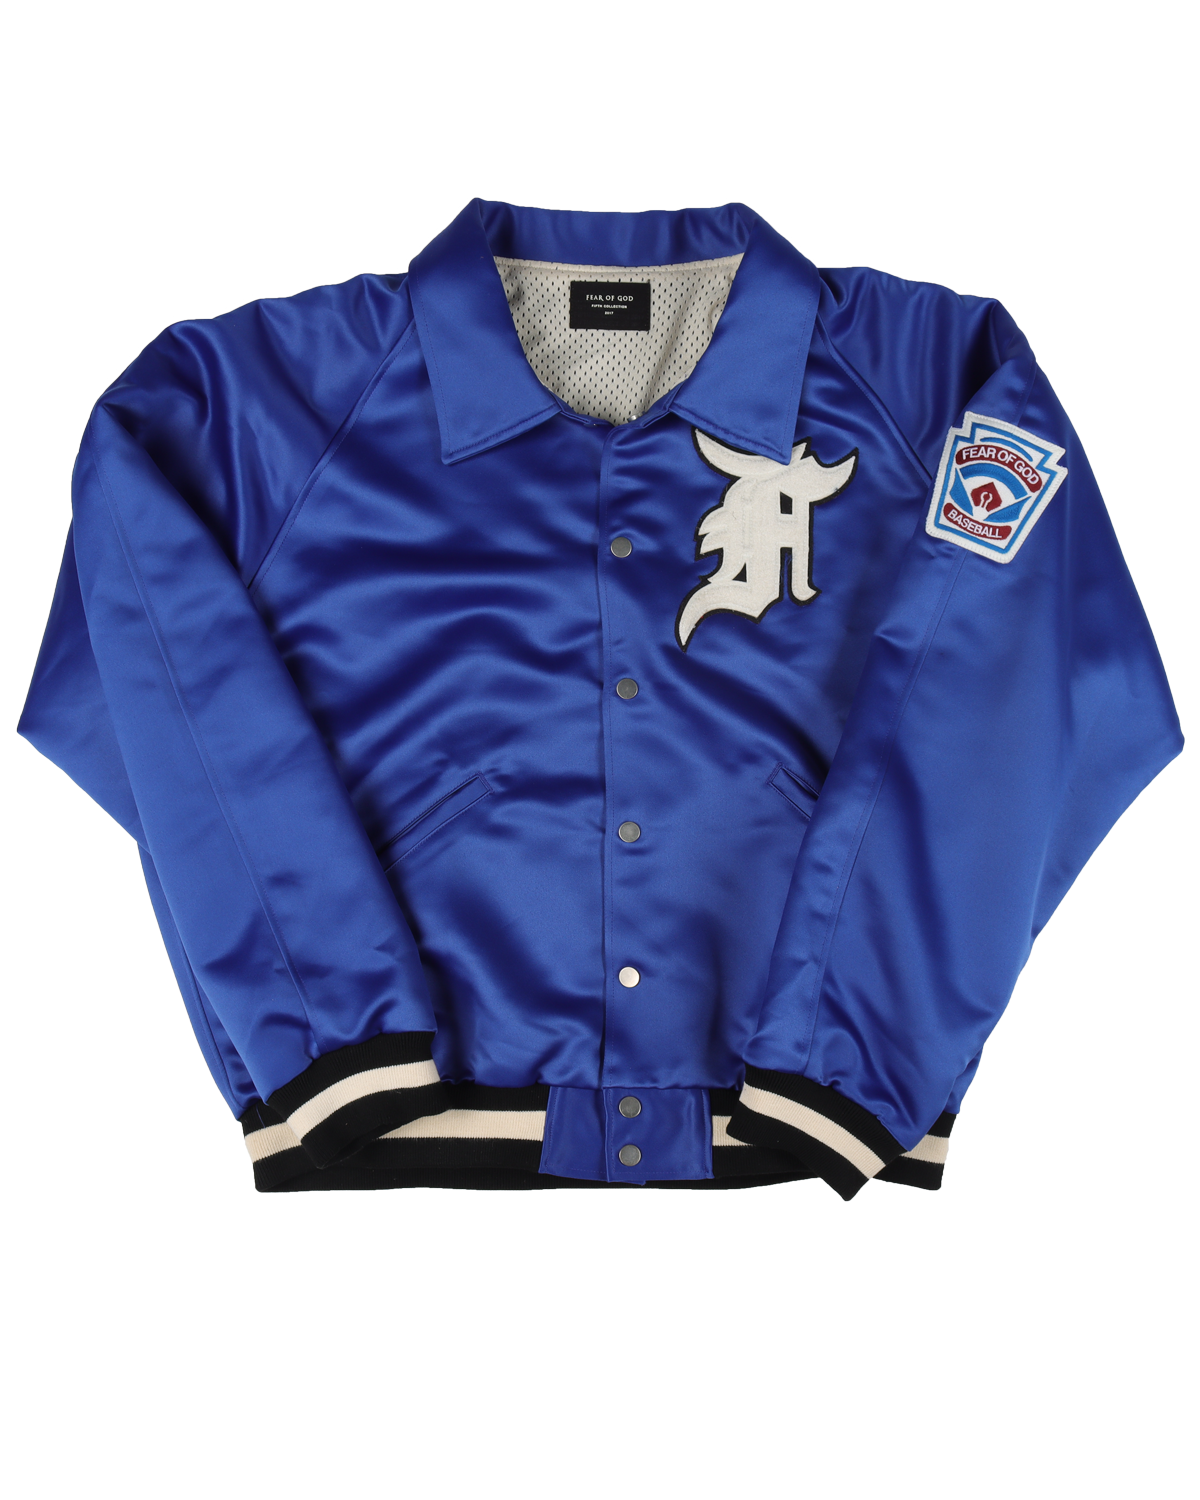 Fifth Collection 'Evident Future' Baseball Varsity Jacket